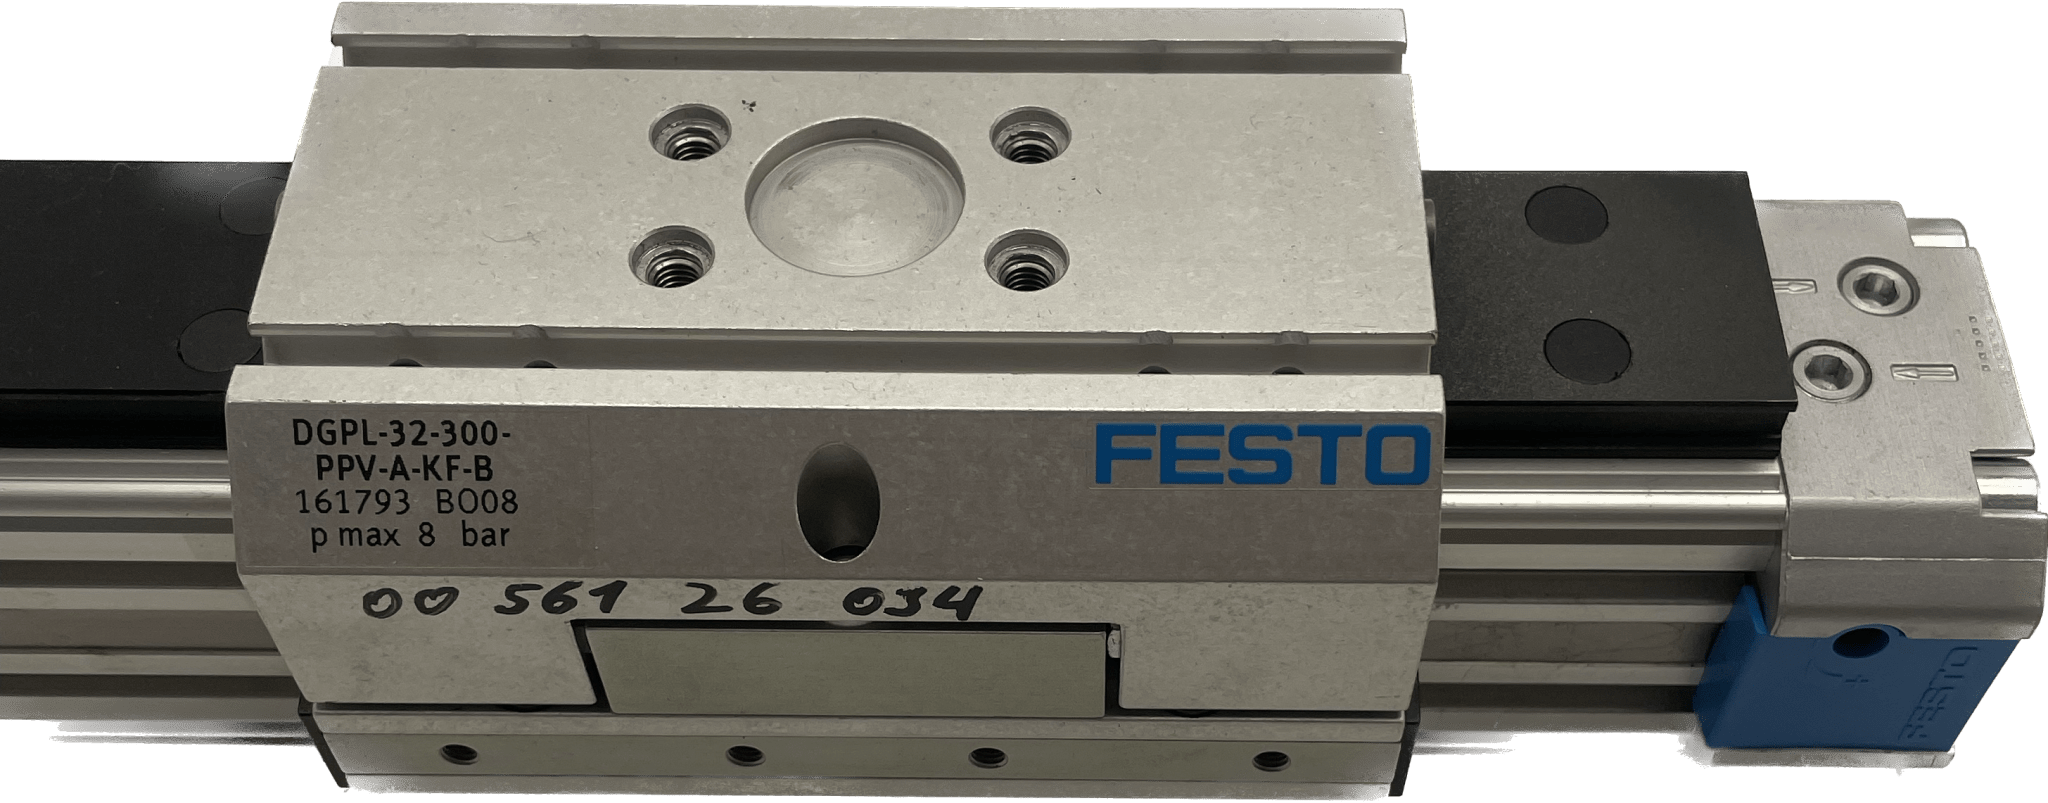 Festo Linearantrieb DGPL-32-300-PPV-A-KF-B - #product_category# | Klenk Maschinenhandel